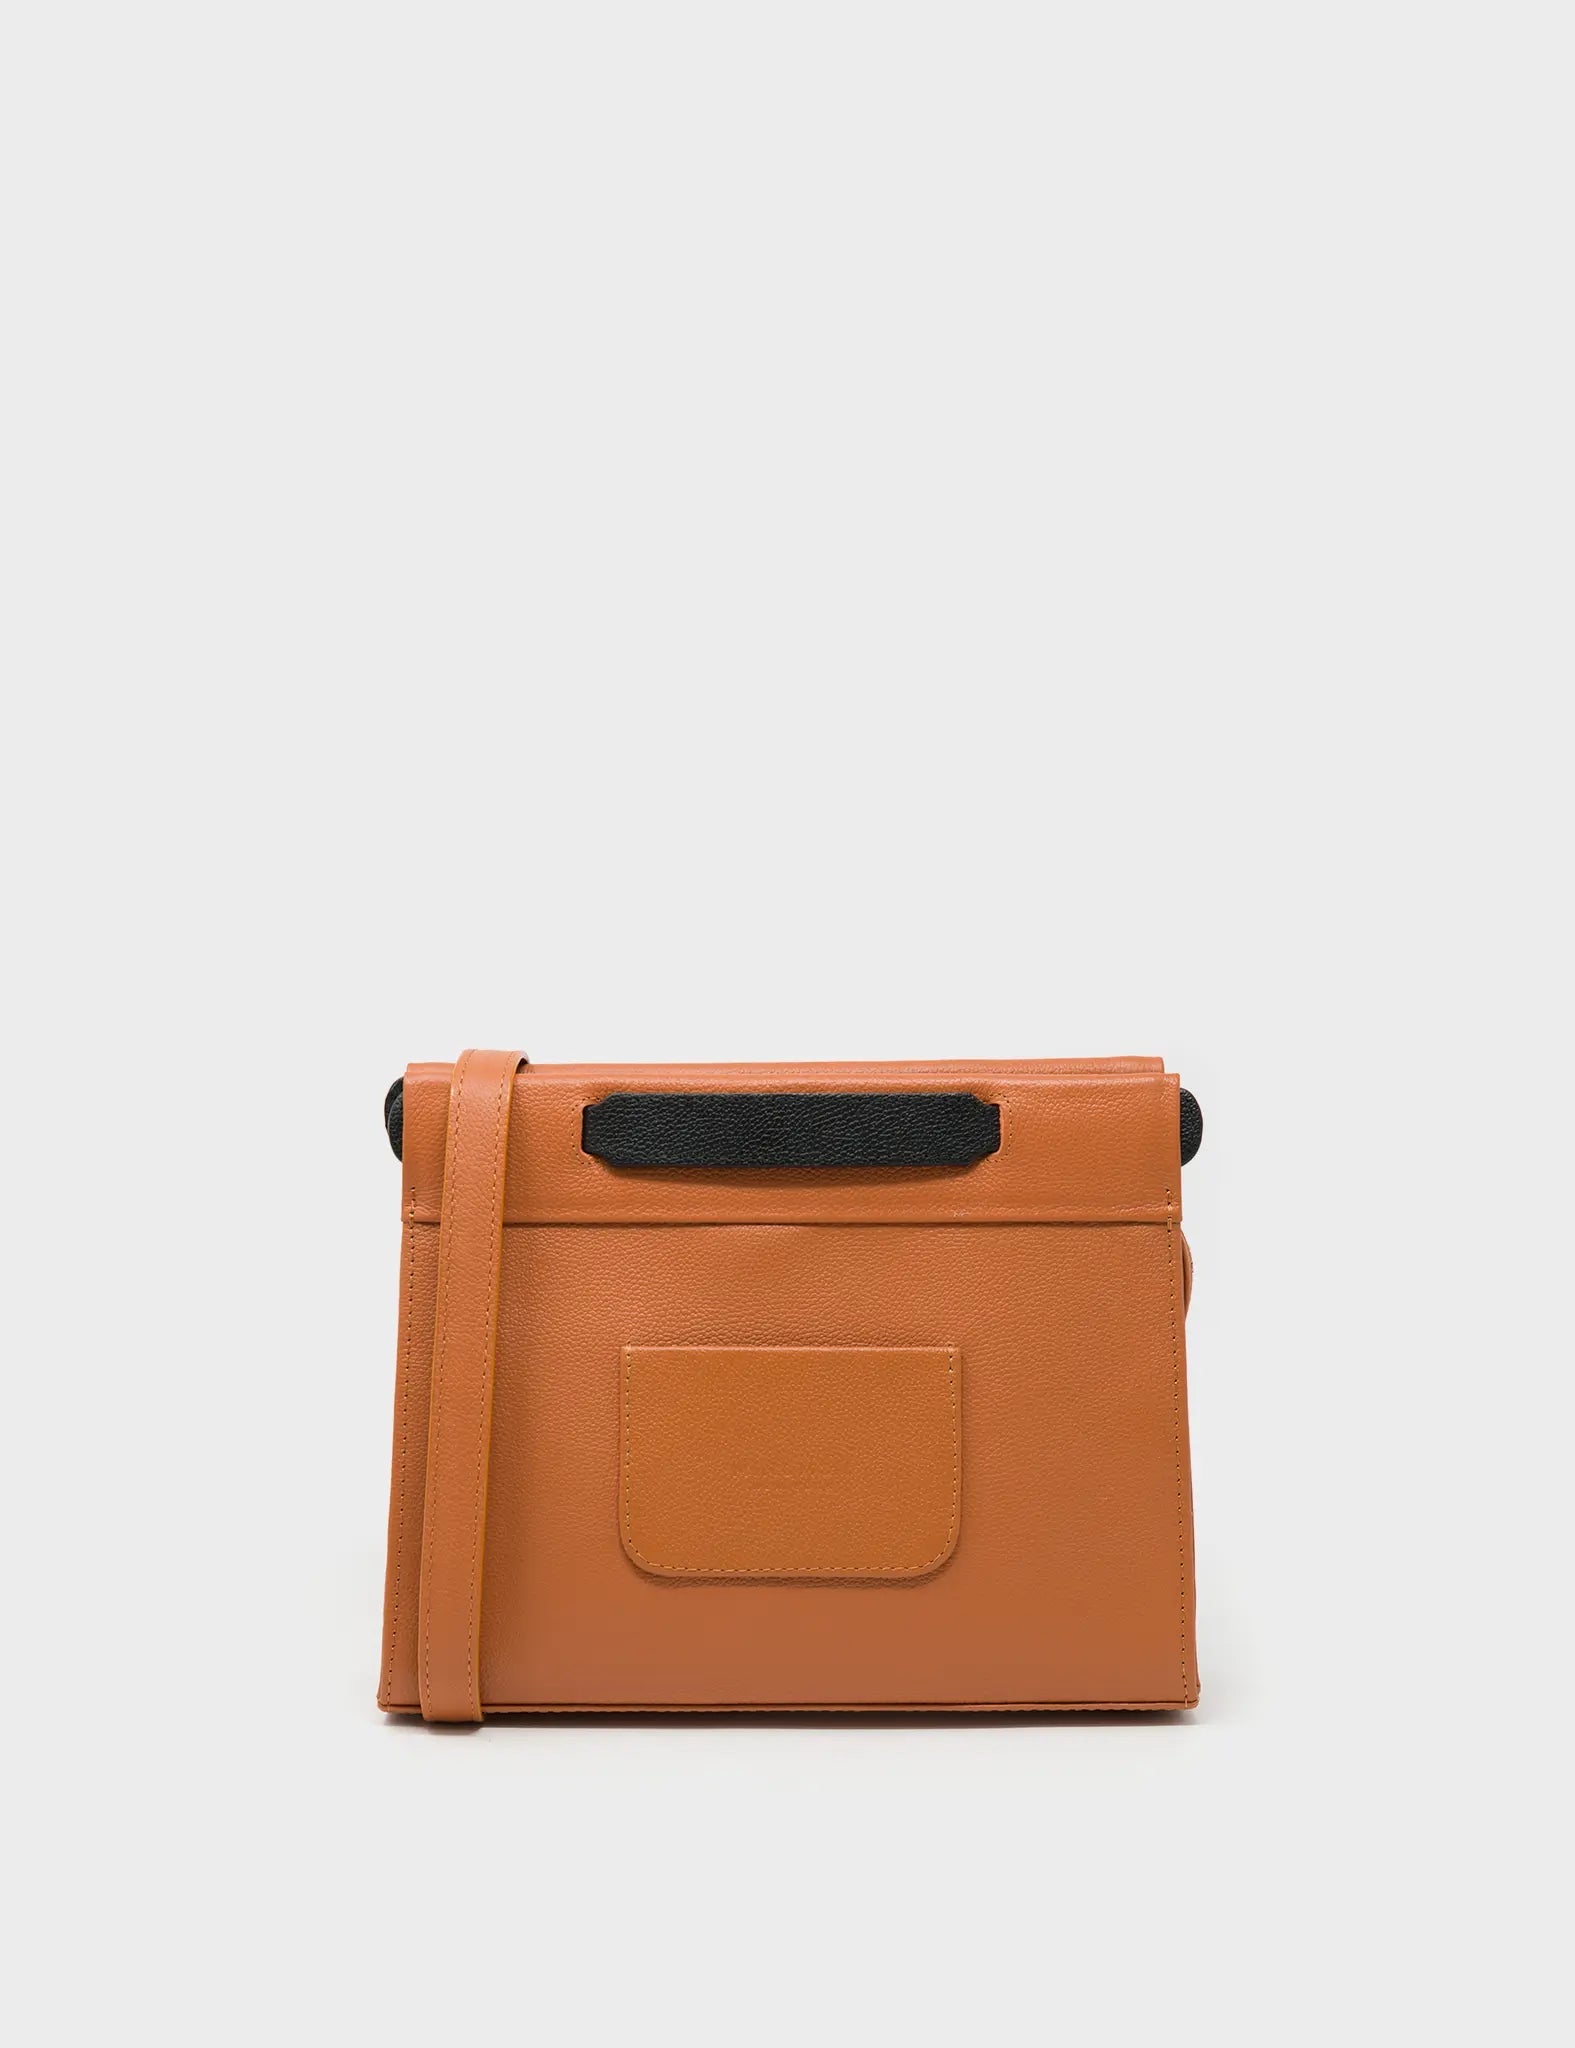 Vali Crossbody Small Caramel Leather Bag - Eyes Applique Adjustable Handle - Back view